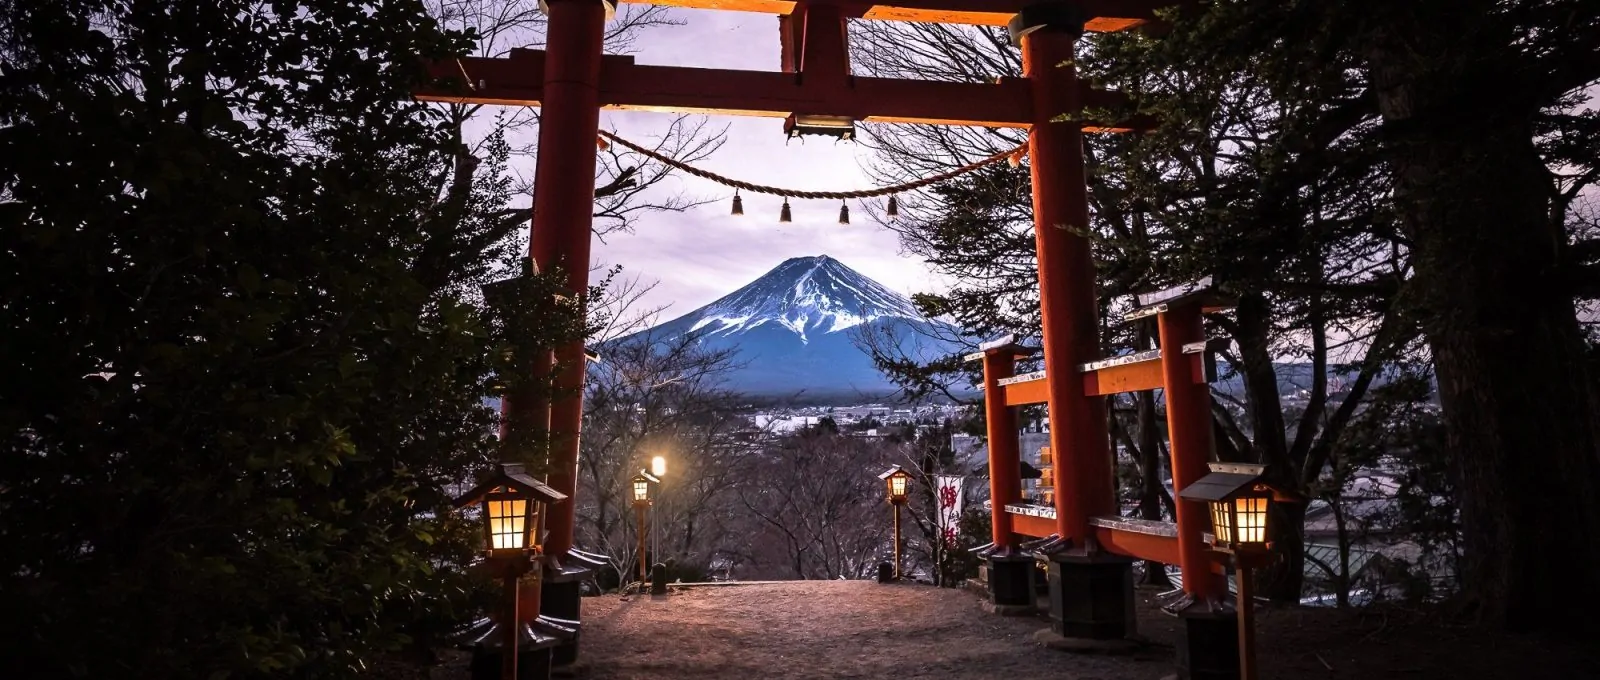 Mount Fuji - Fujiyoshida, Japan - Travel photography